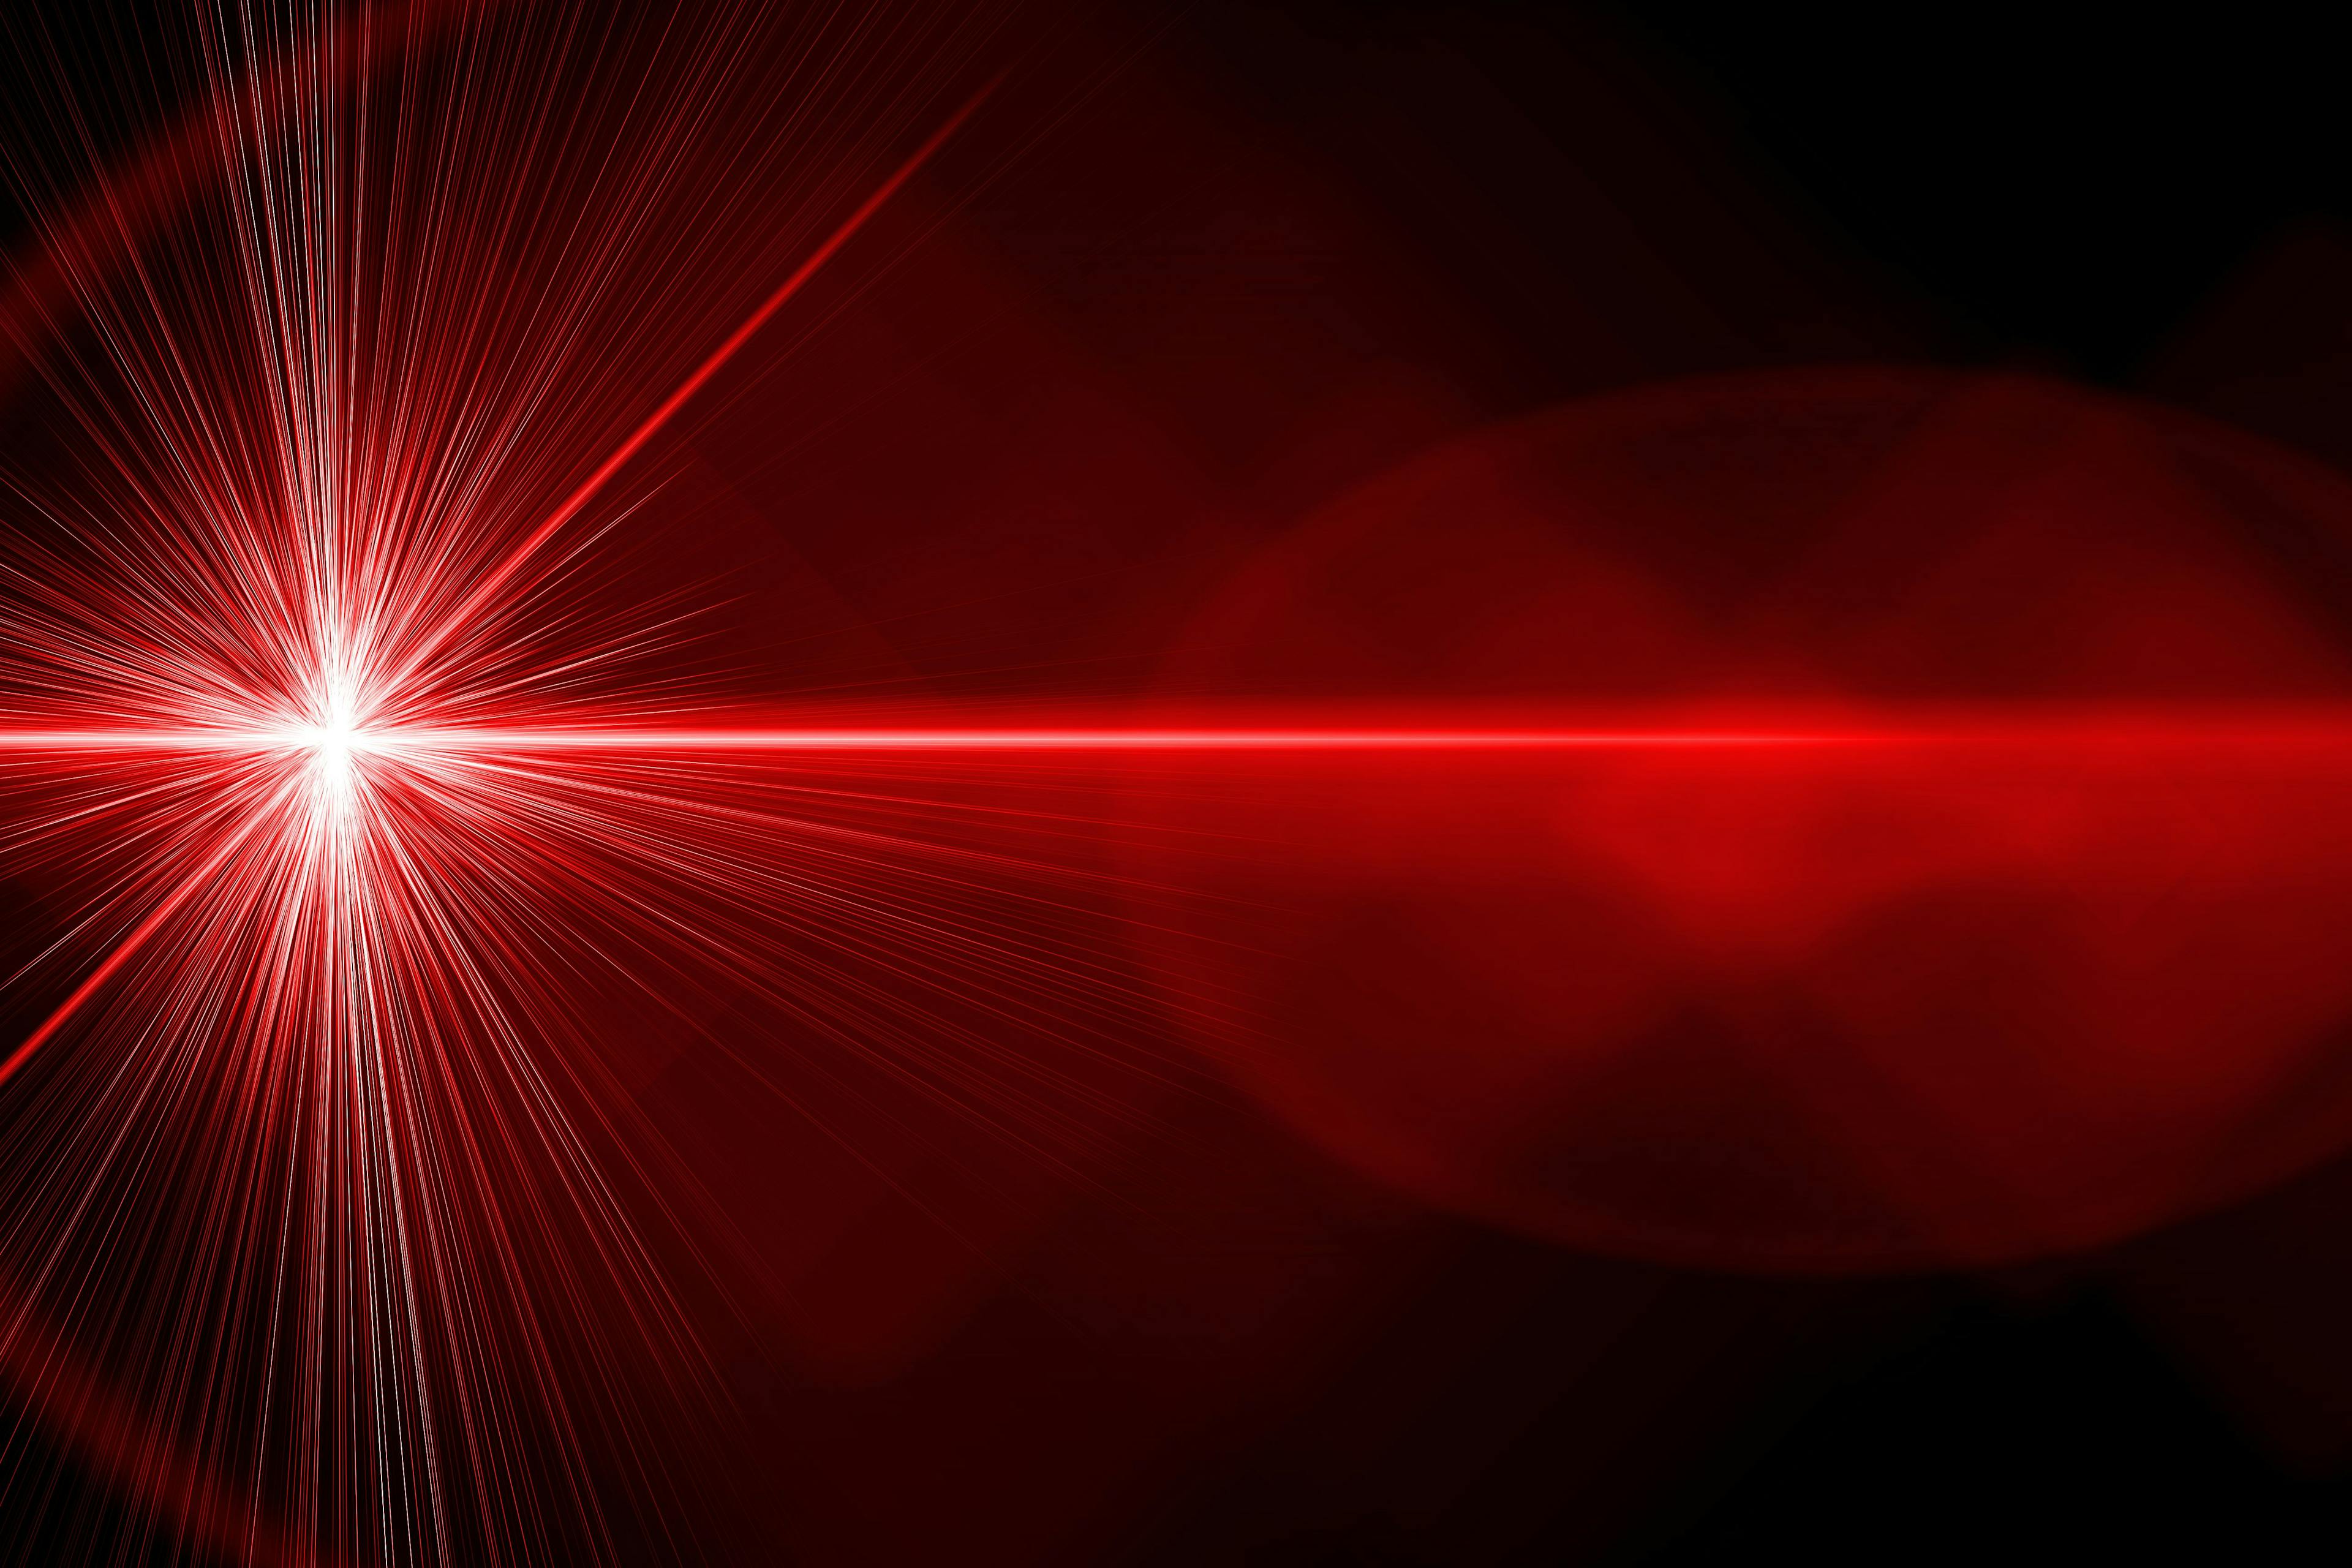 Red laser light | Image Credit: © Jürgen Fälchle - stock.adobe.com